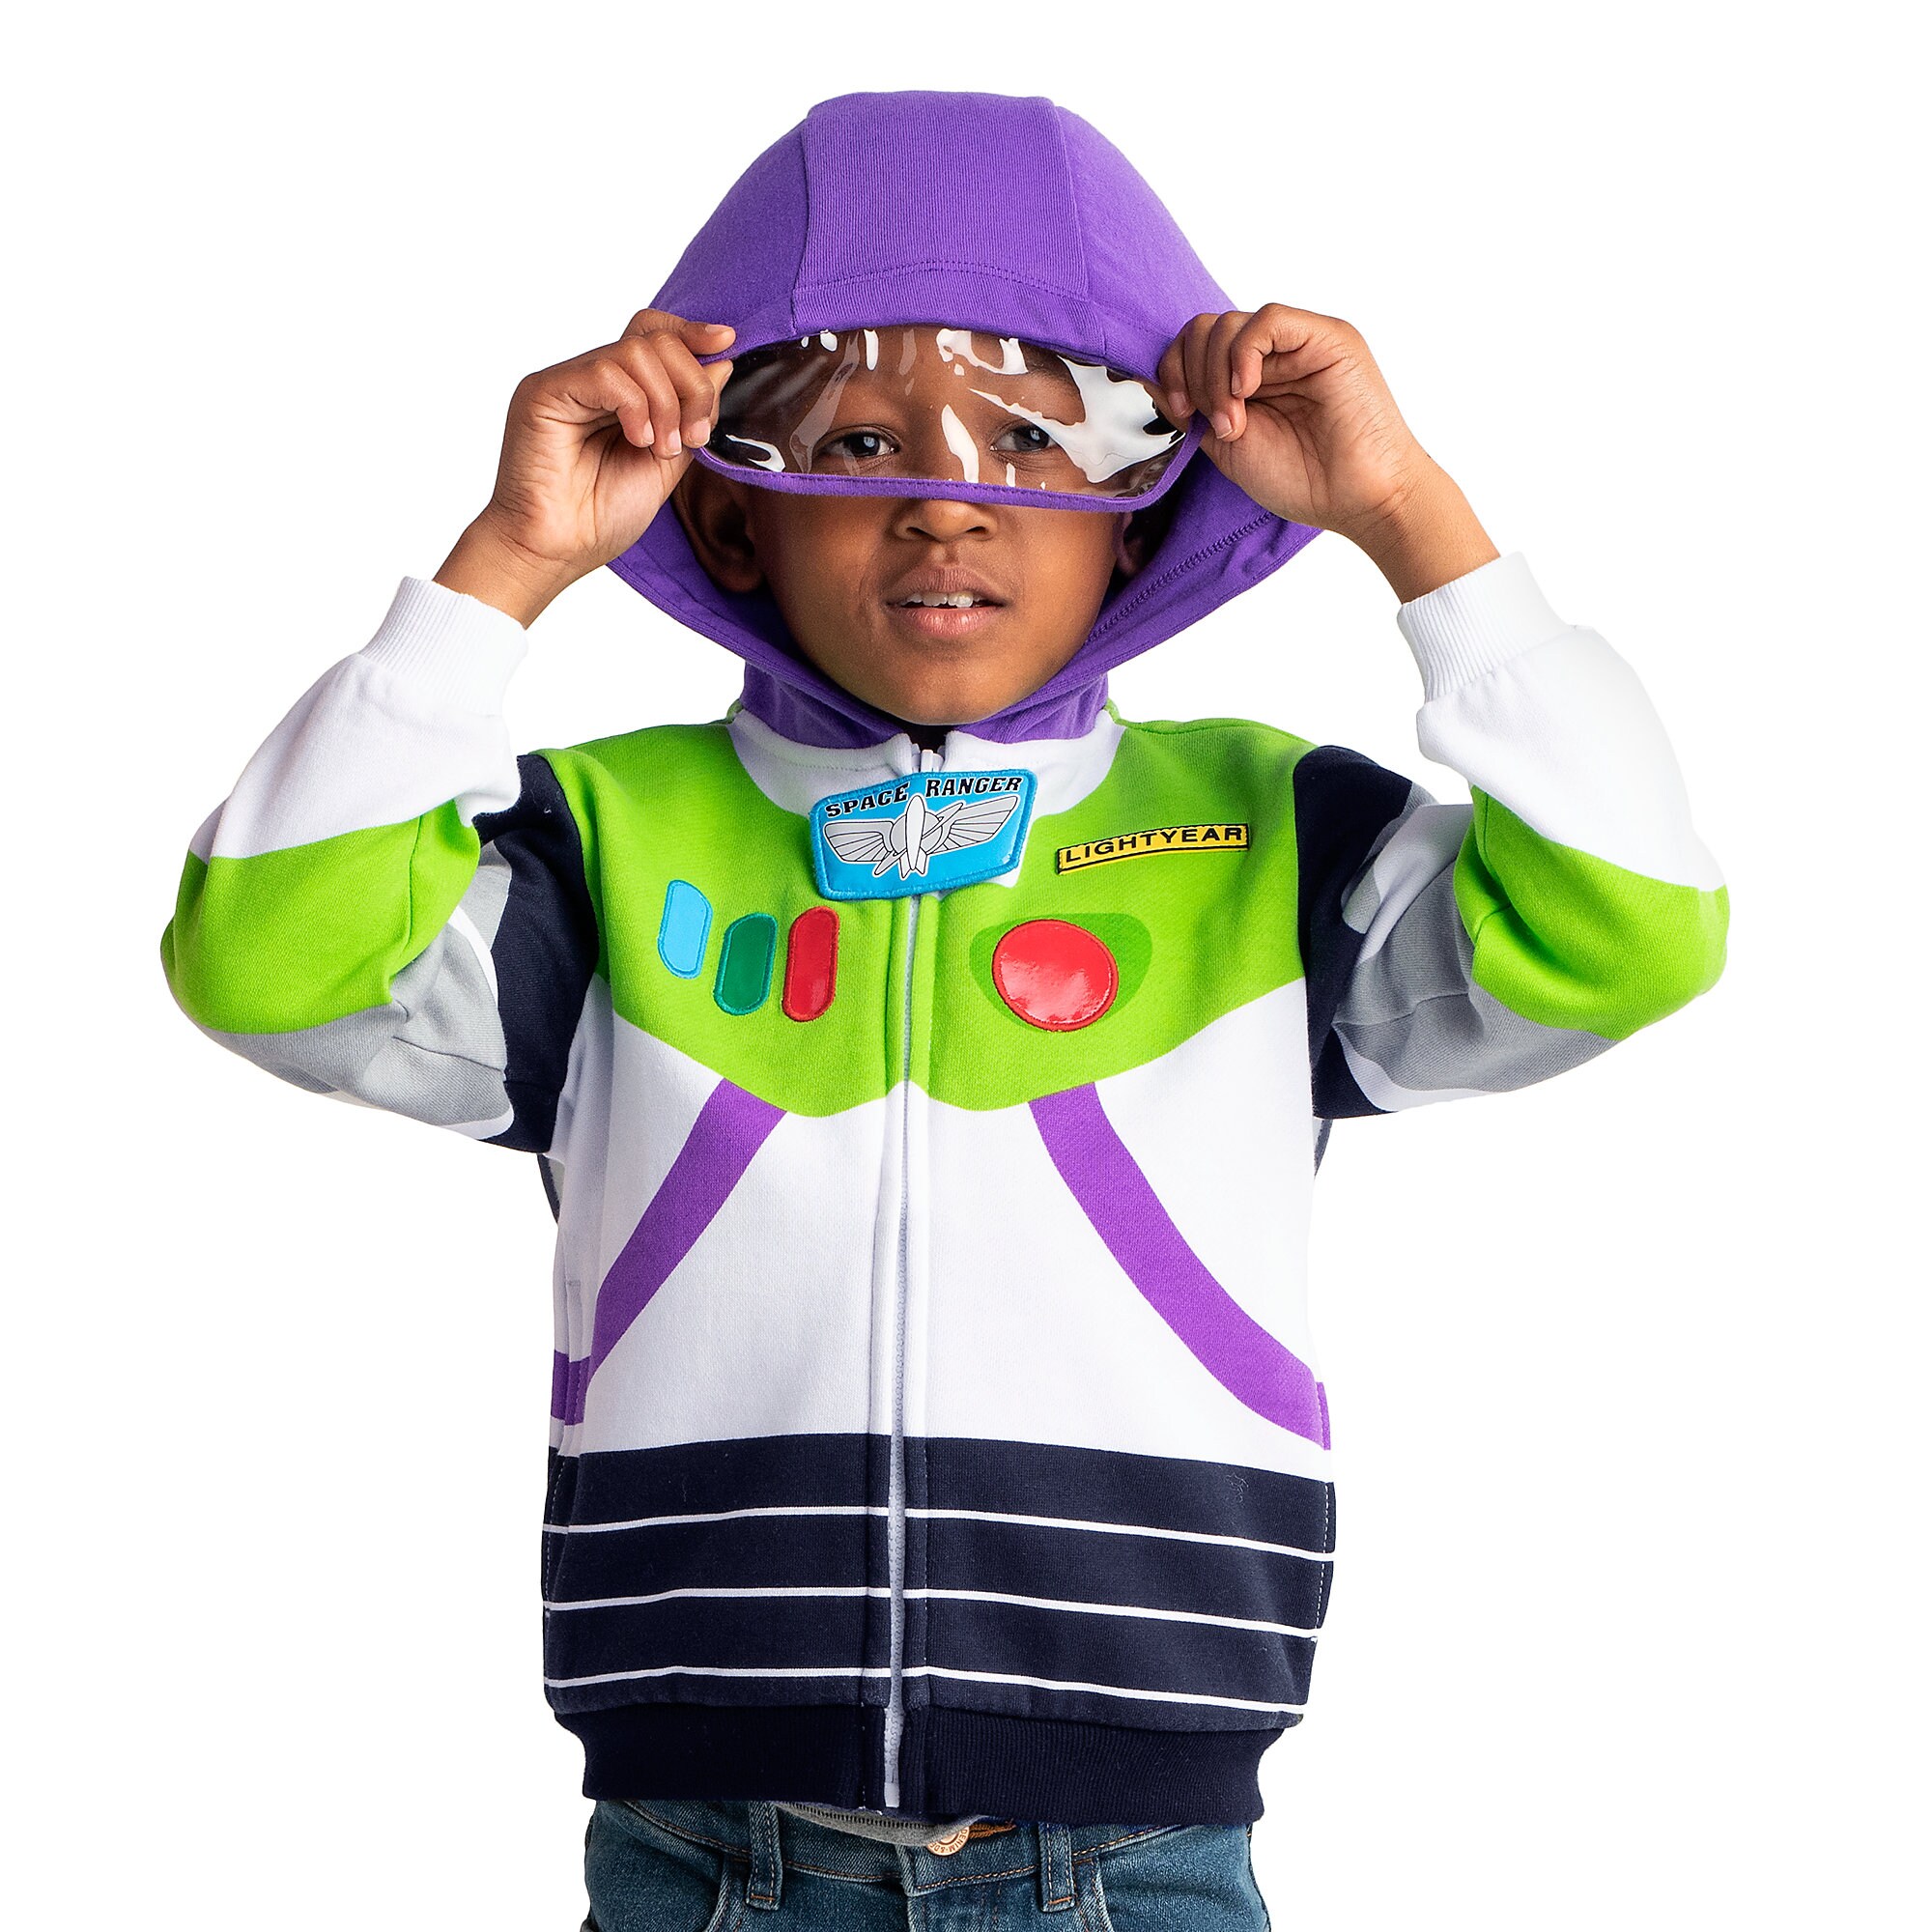 Buzz Lightyear Costume Hoodie for Boys